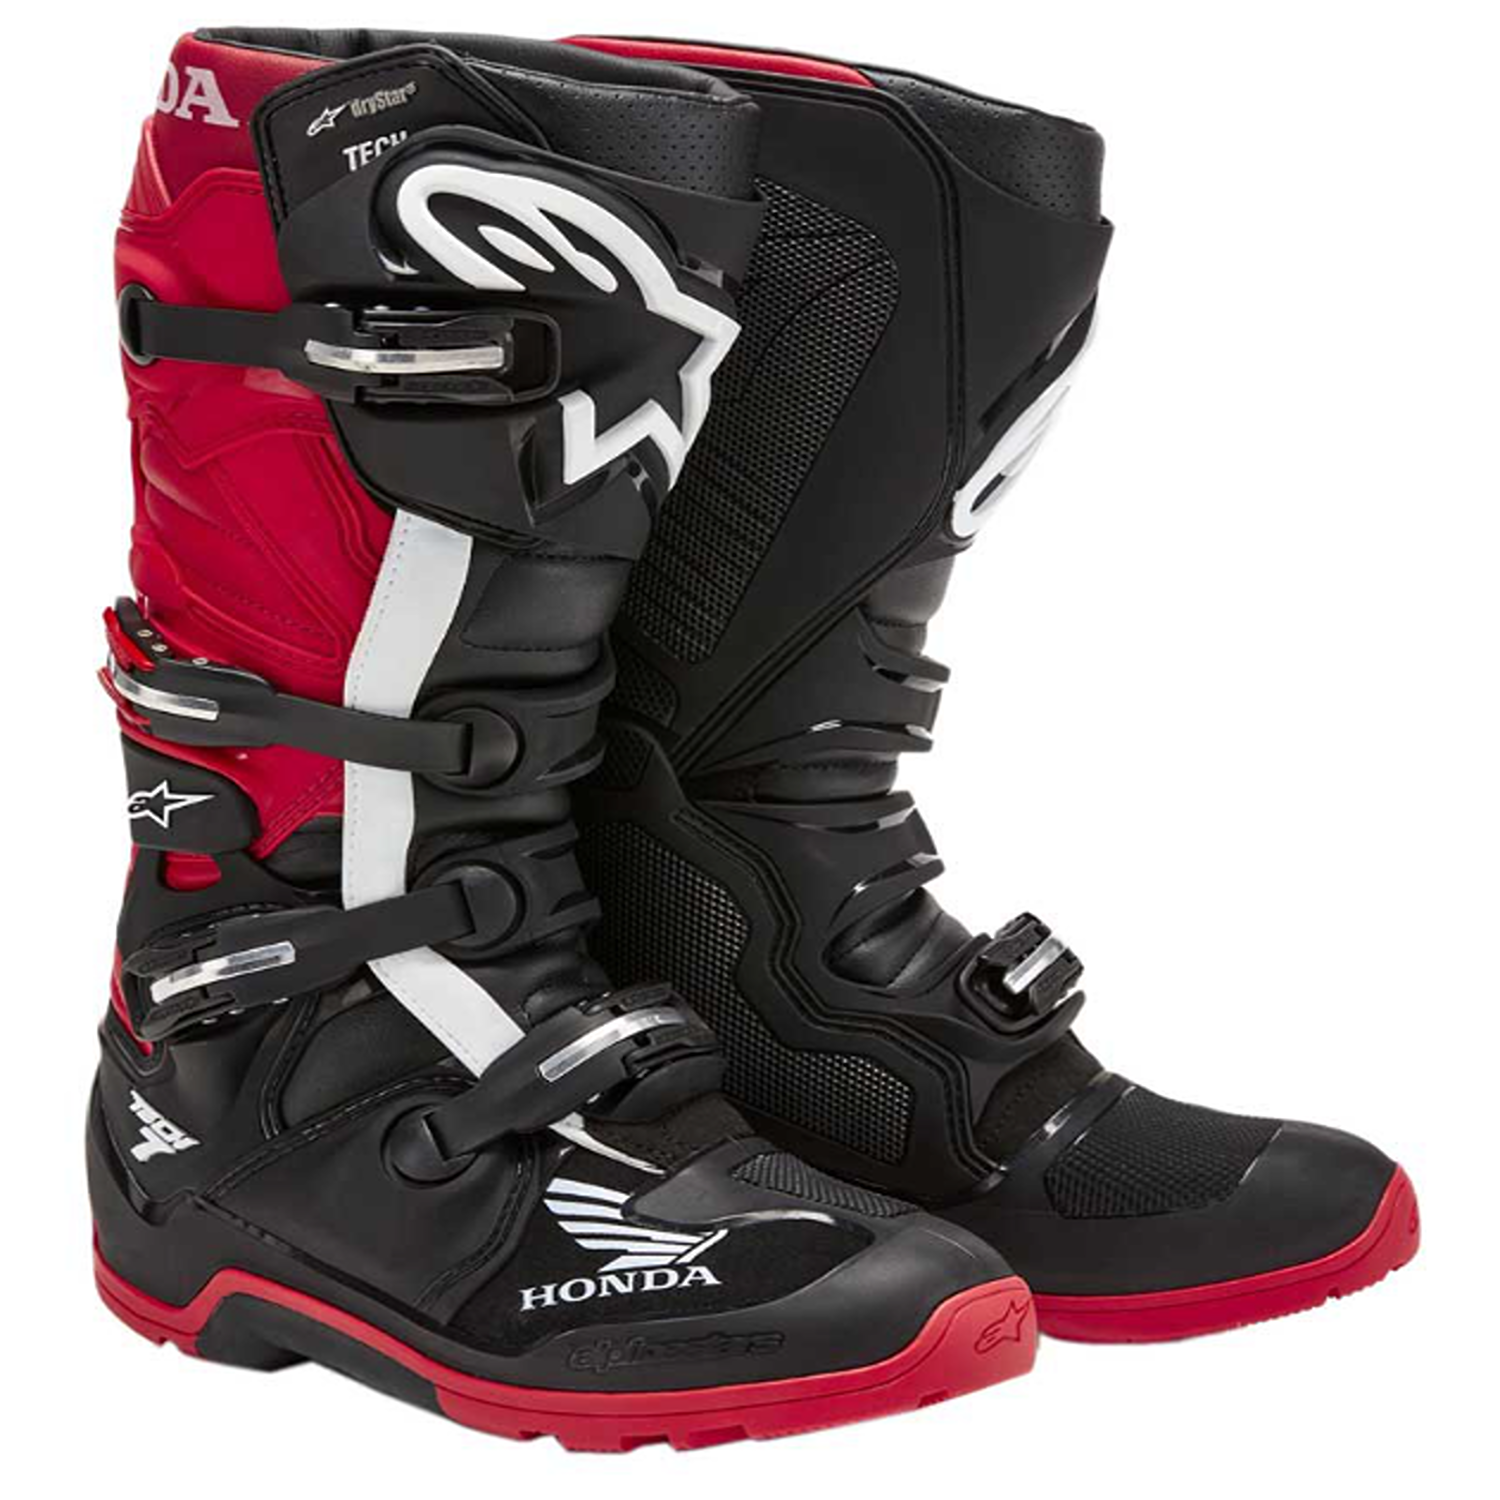 Image of Alpinestars Honda Tech 7 Enduro Drystar Boots Black Bright Red Taille US 11